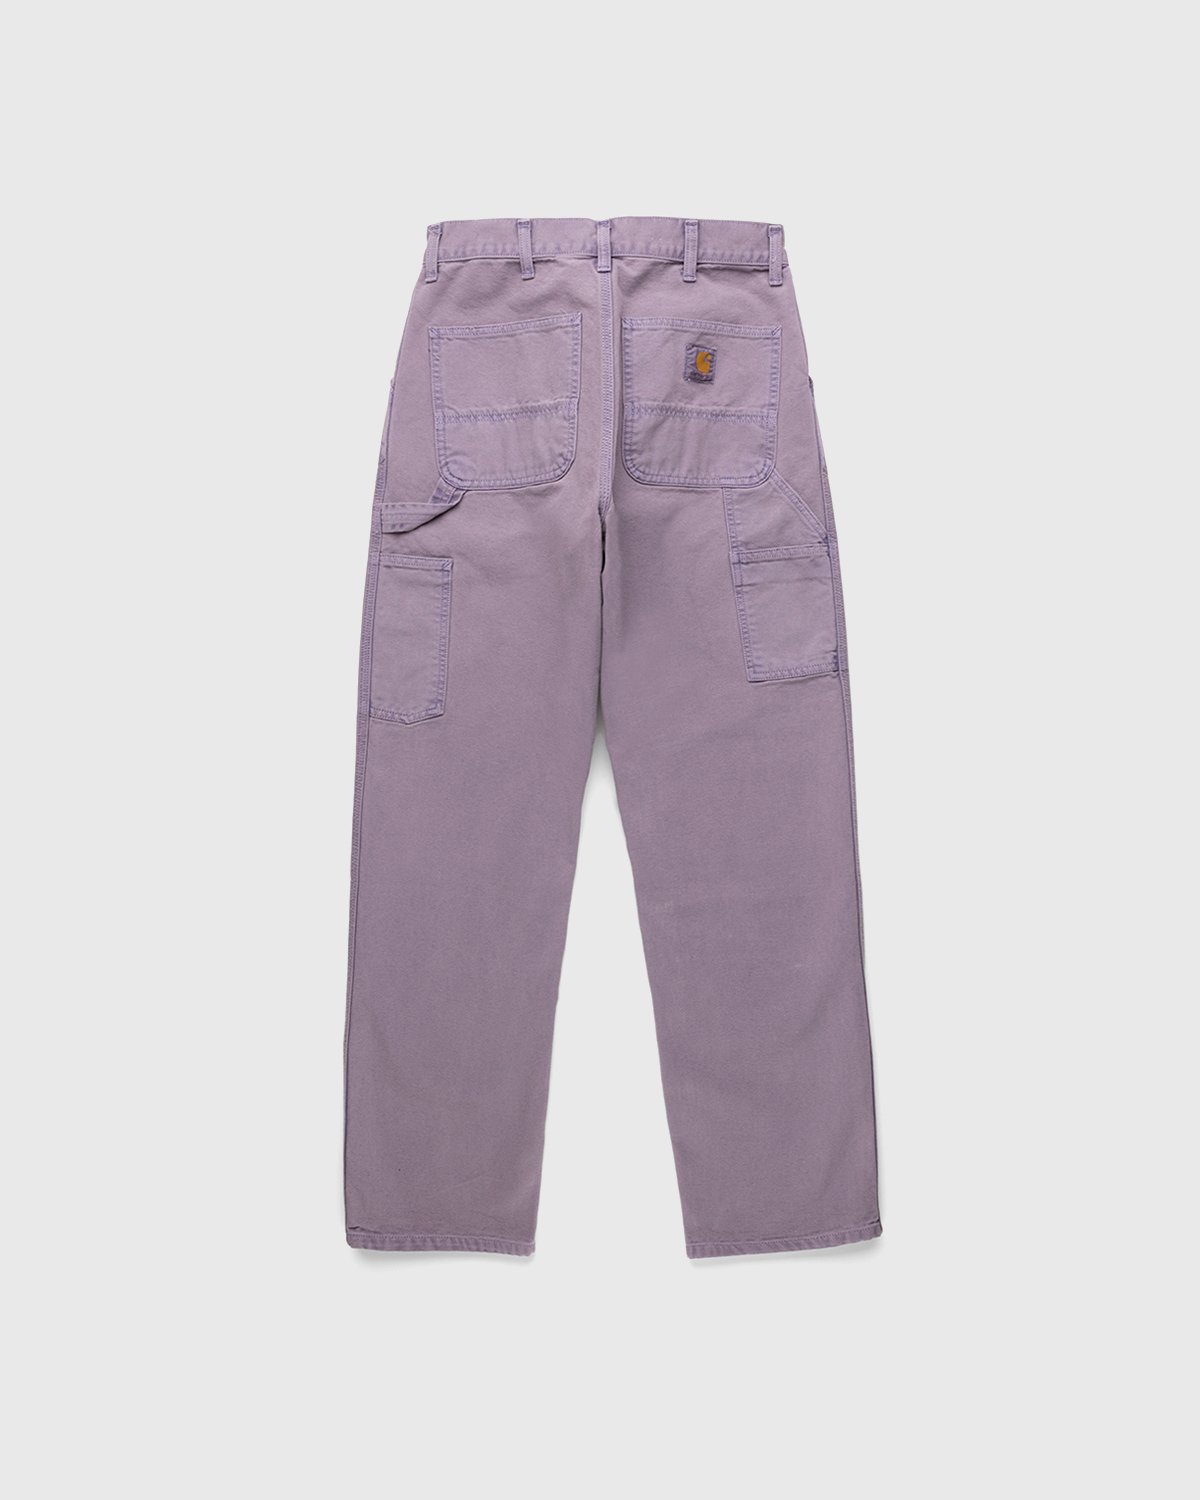 Carhartt WIP - Single Knee Pant Razzmic Faded - Clothing - Purple - Image 2